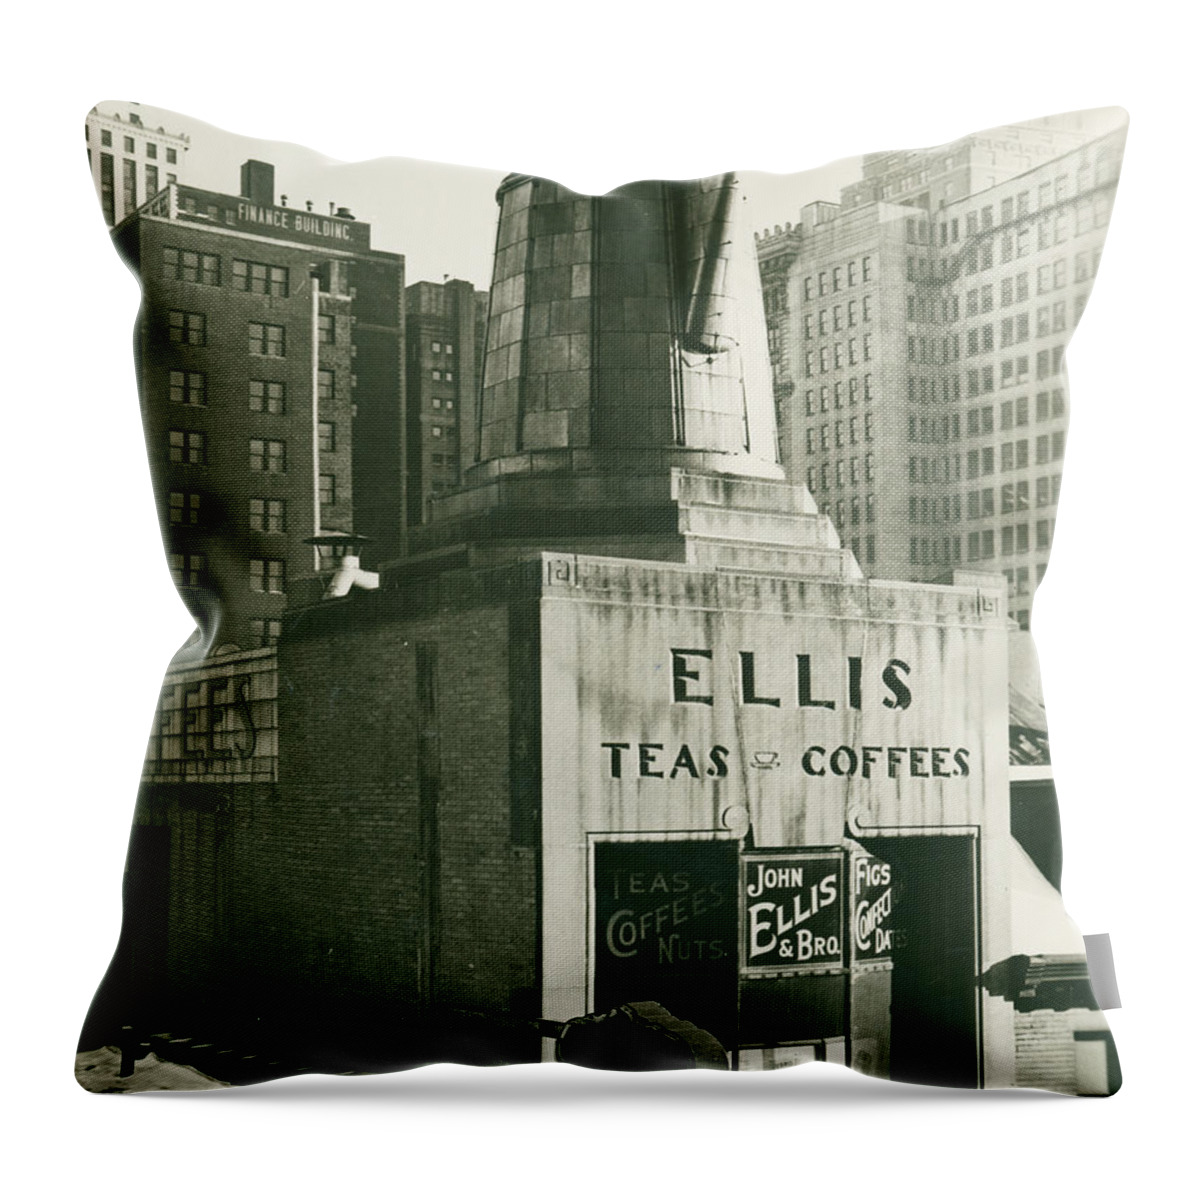 Ellis Teas;and Coffees Throw Pillow featuring the mixed media Ellis Tea and Coffee Store, 1945 by Jacob Stelman